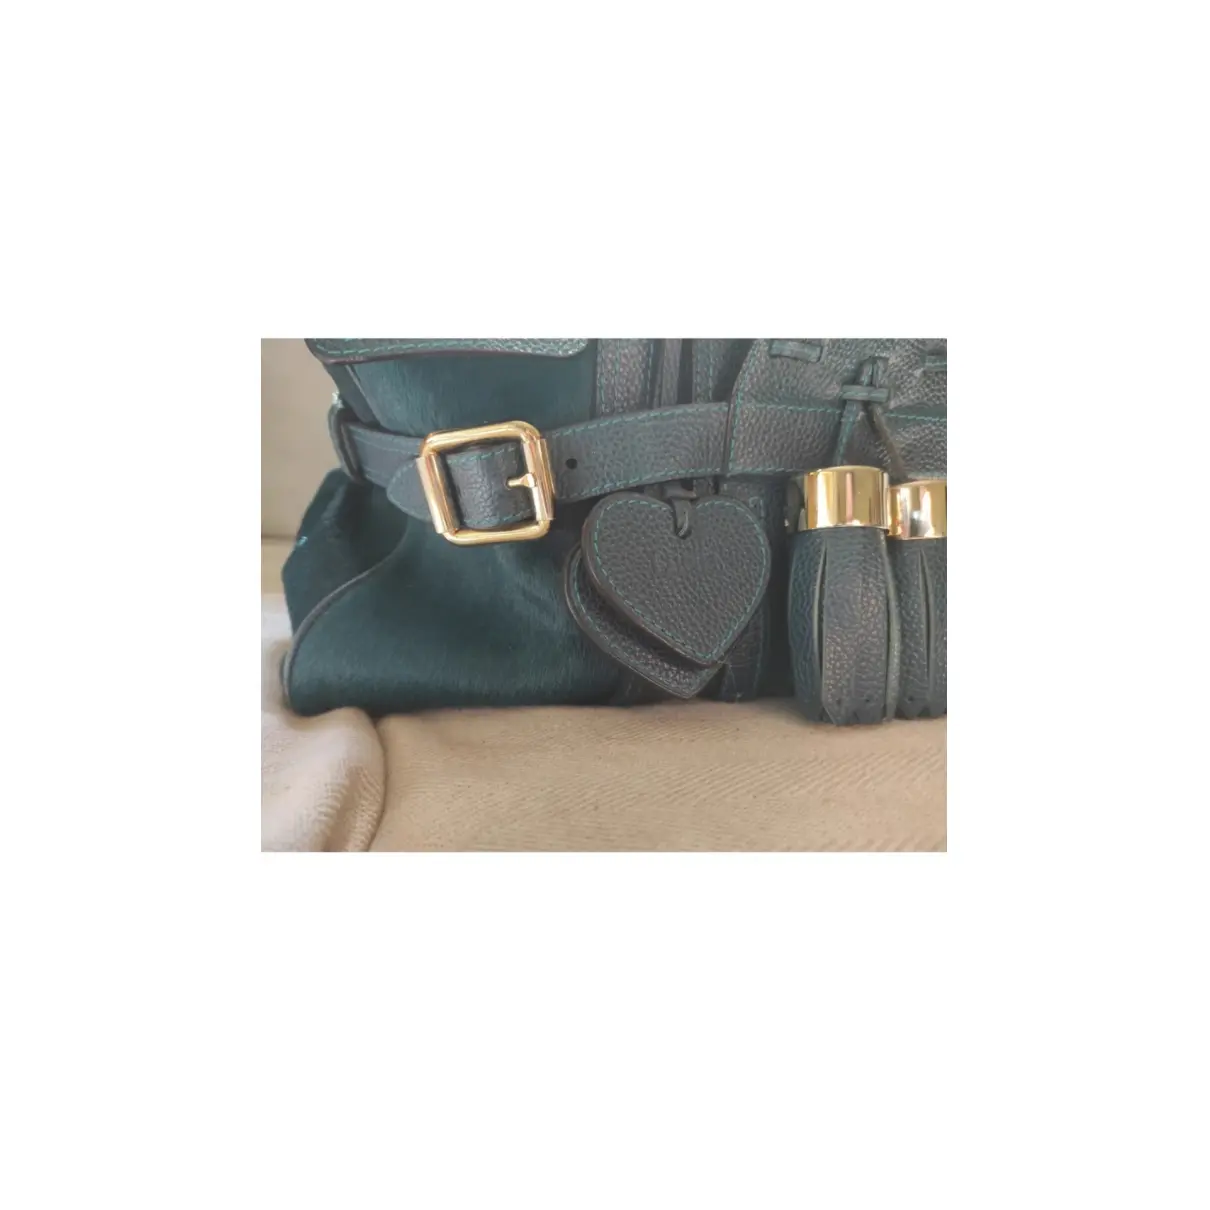 Leather handbag Luella